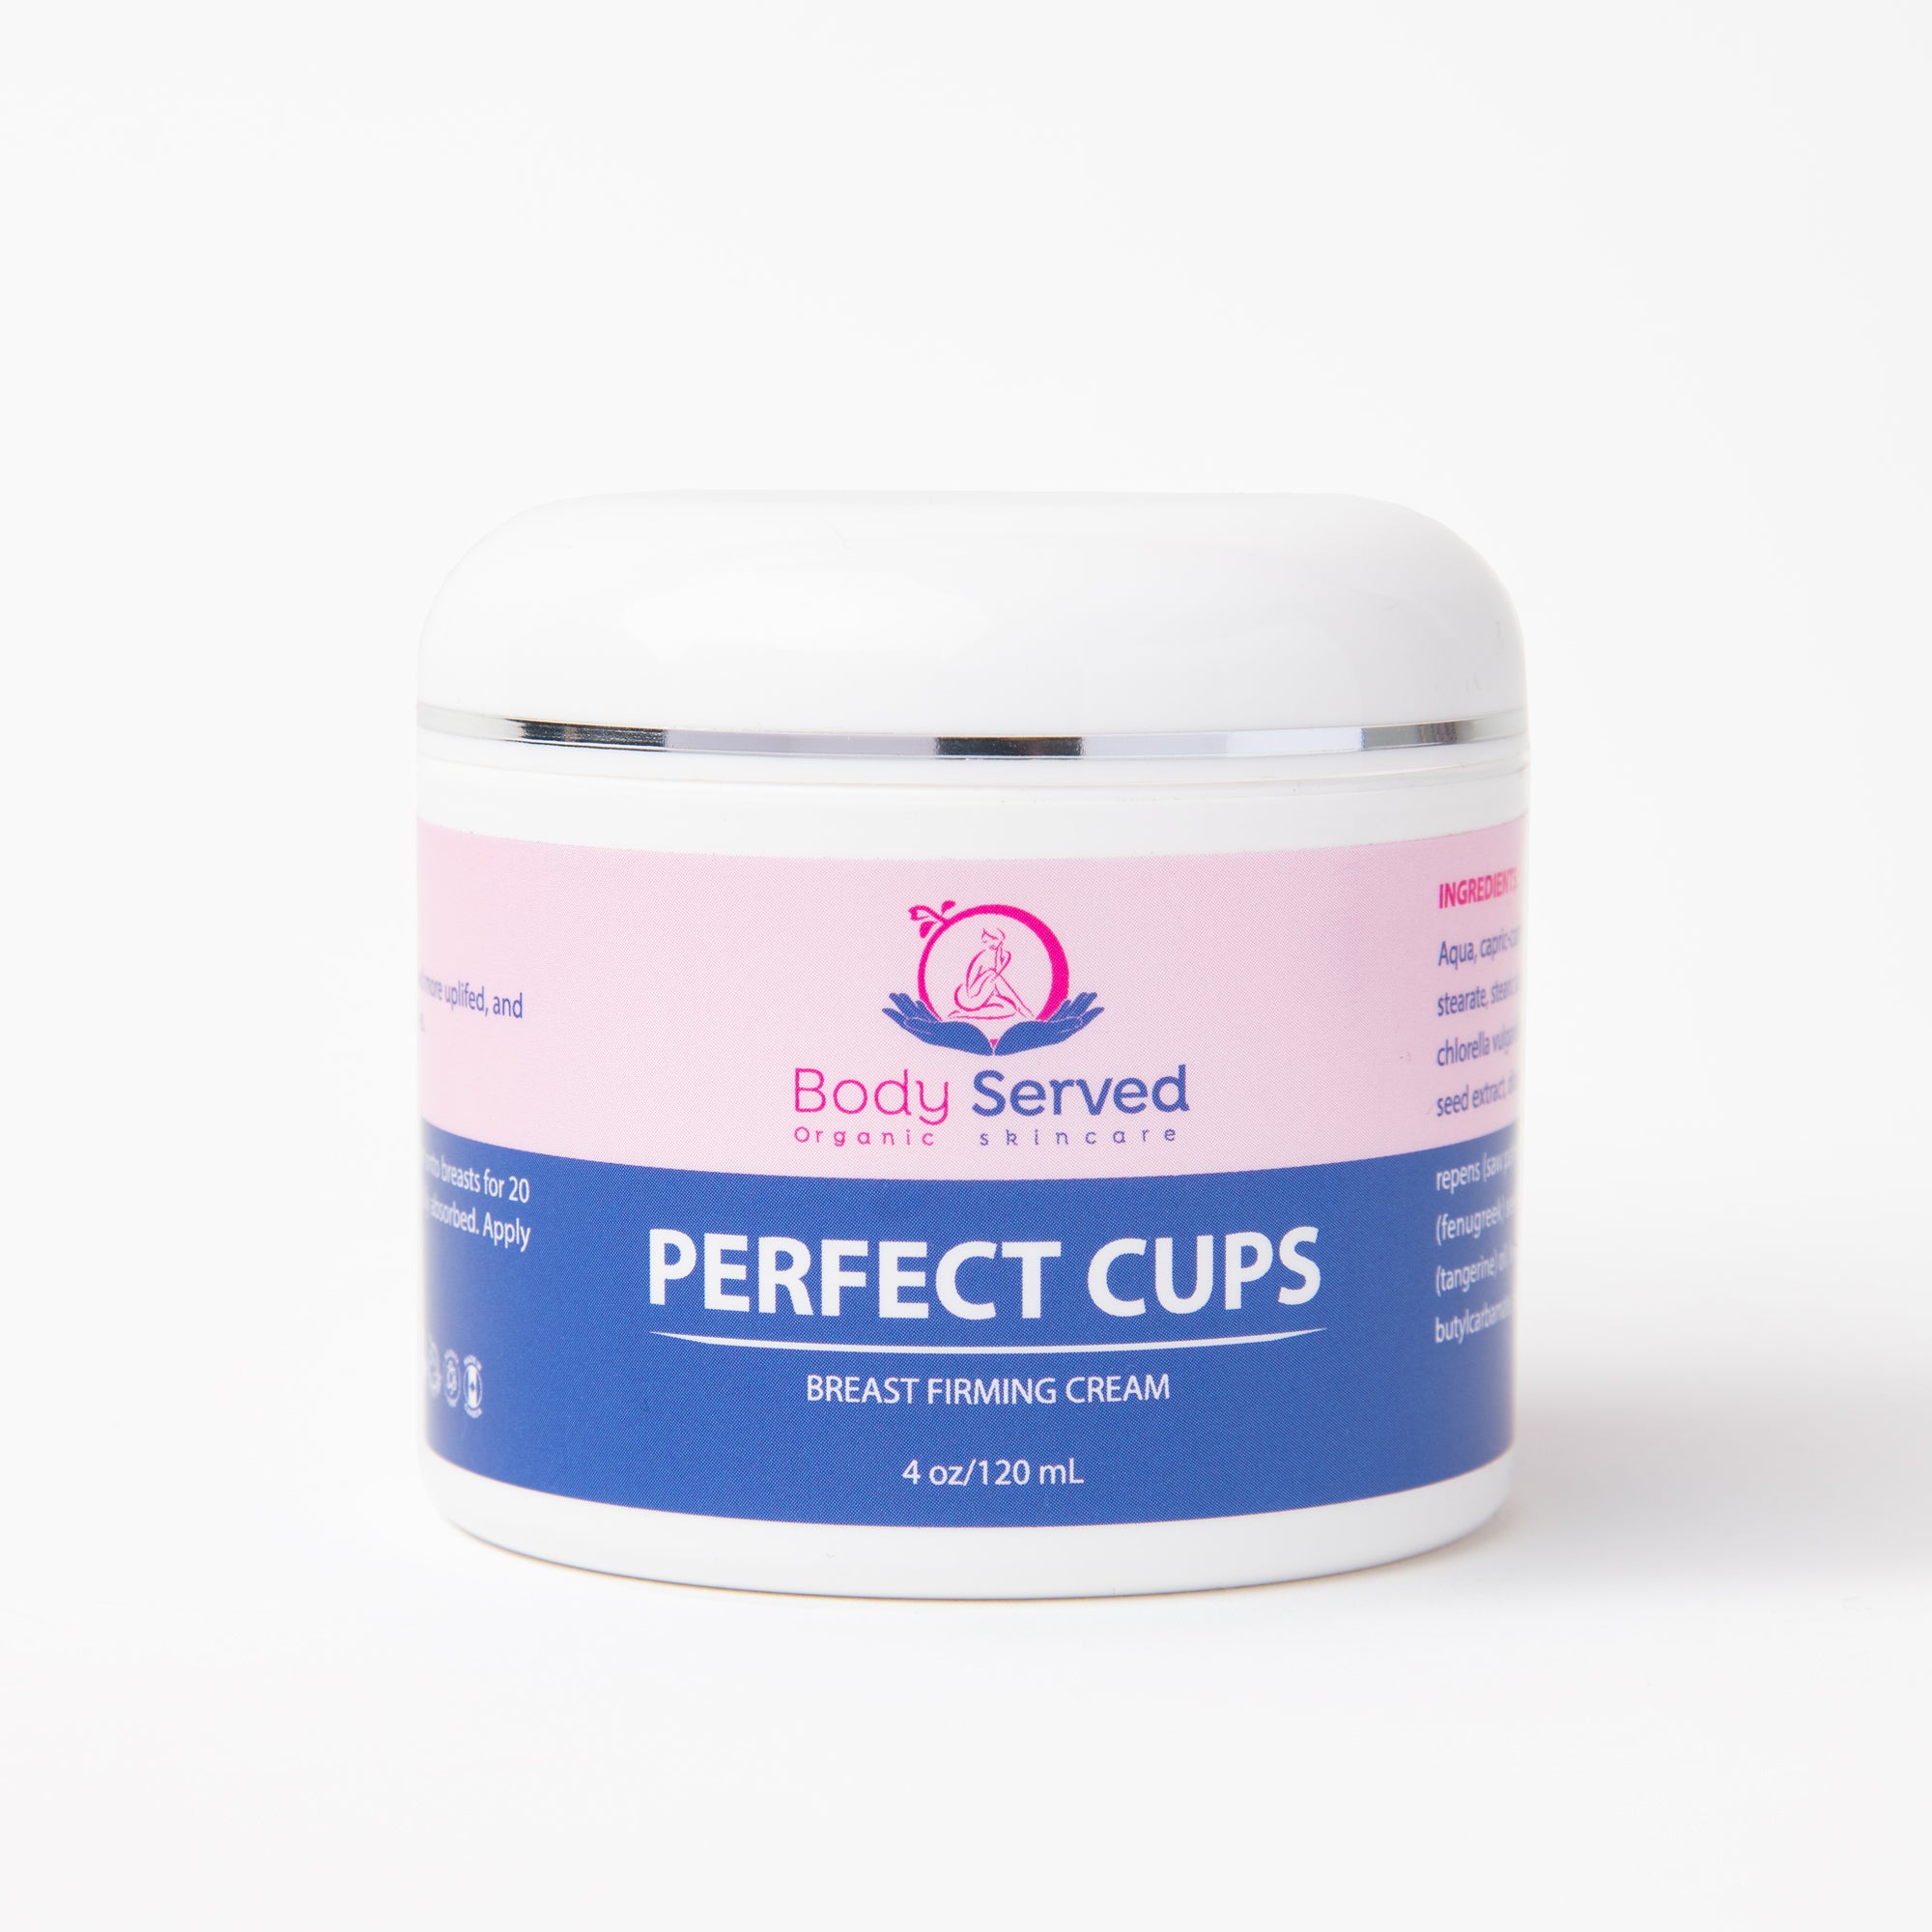 "PERFECT CUPS" - Breast Enhancement Cream